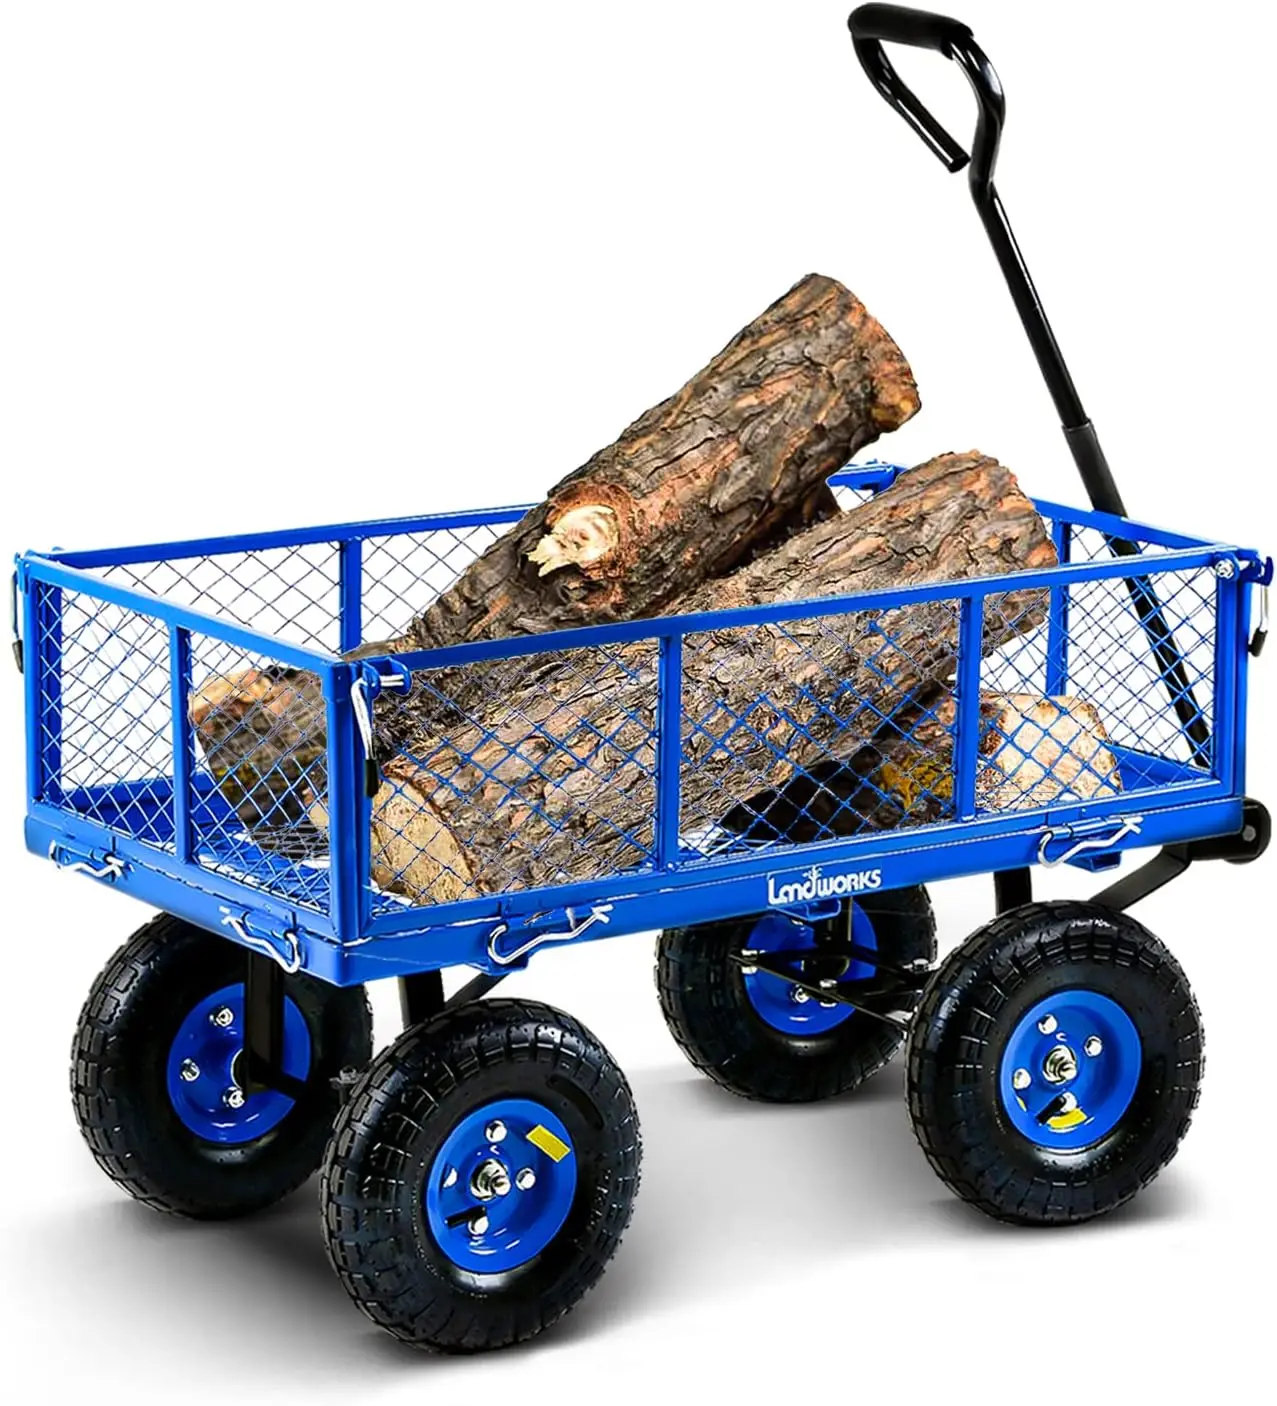 

Lawn & Garden Utility Cart/Beach Wagon, All Terrain, w/Heavy Duty Removable Side Meshes, 400 lbs Cap, Blue